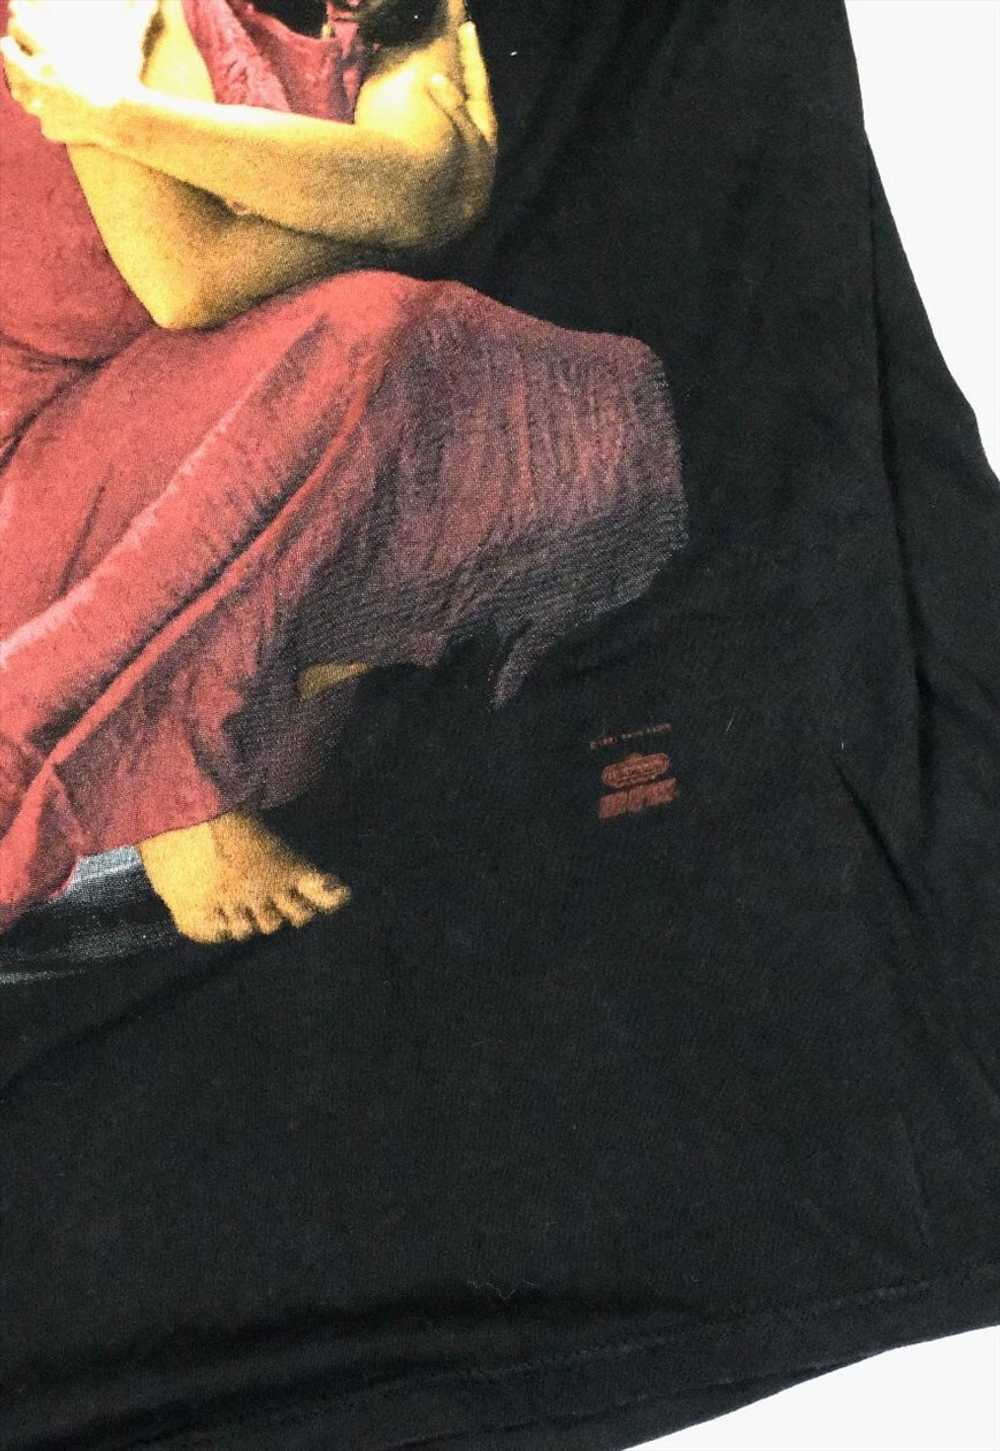 1991 Paula Abdul Under My Spell Tour T-shirt - image 3